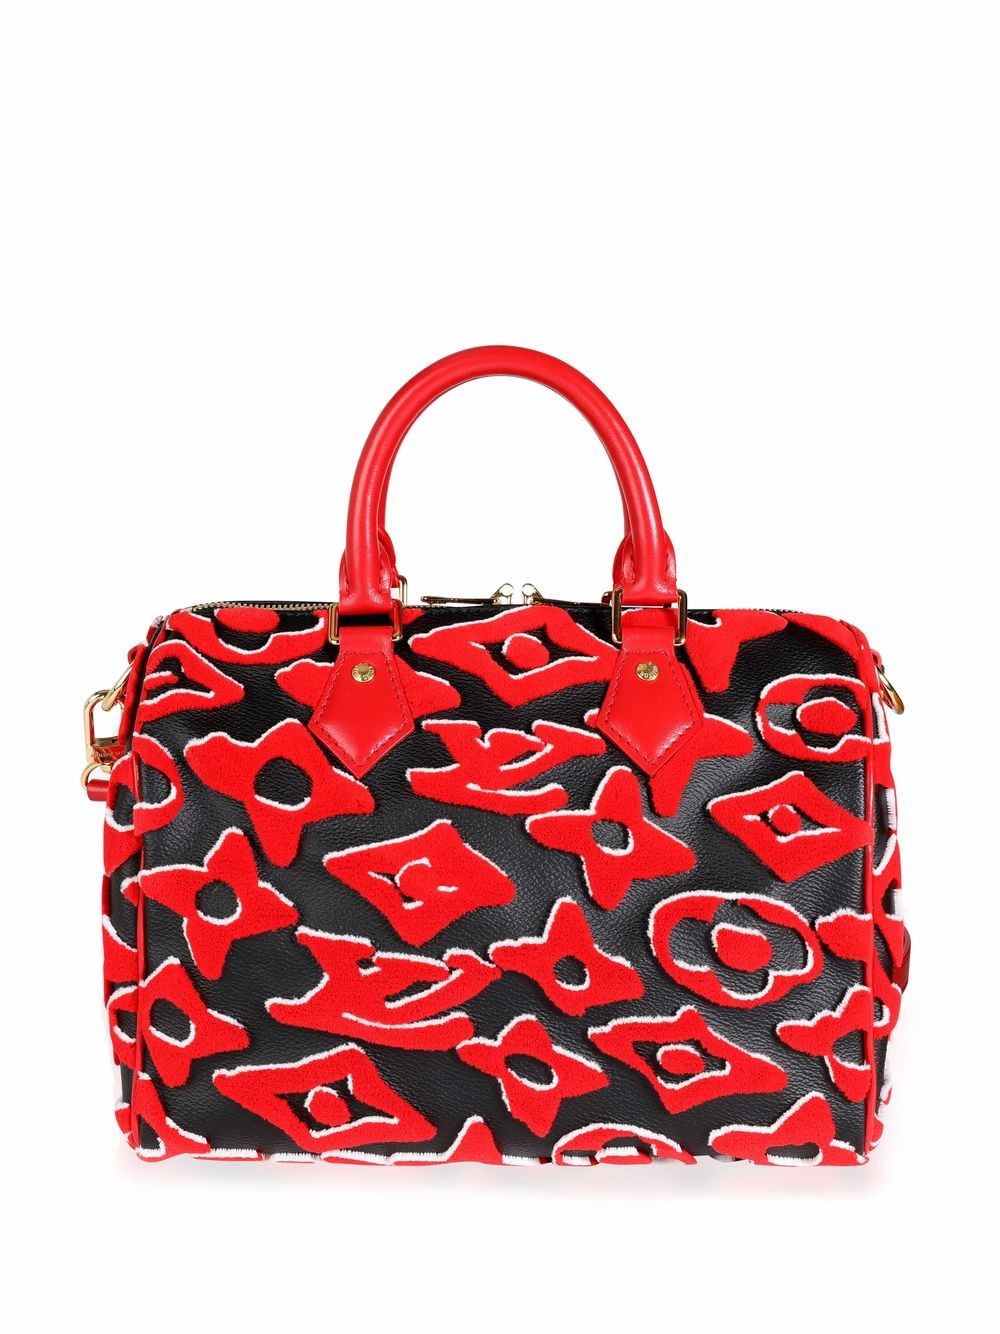 Louis Vuitton Urs Fischer x LV Limited Edition Puffer Black Red Dark red  Polyester Viscose ref.764686 - Joli Closet